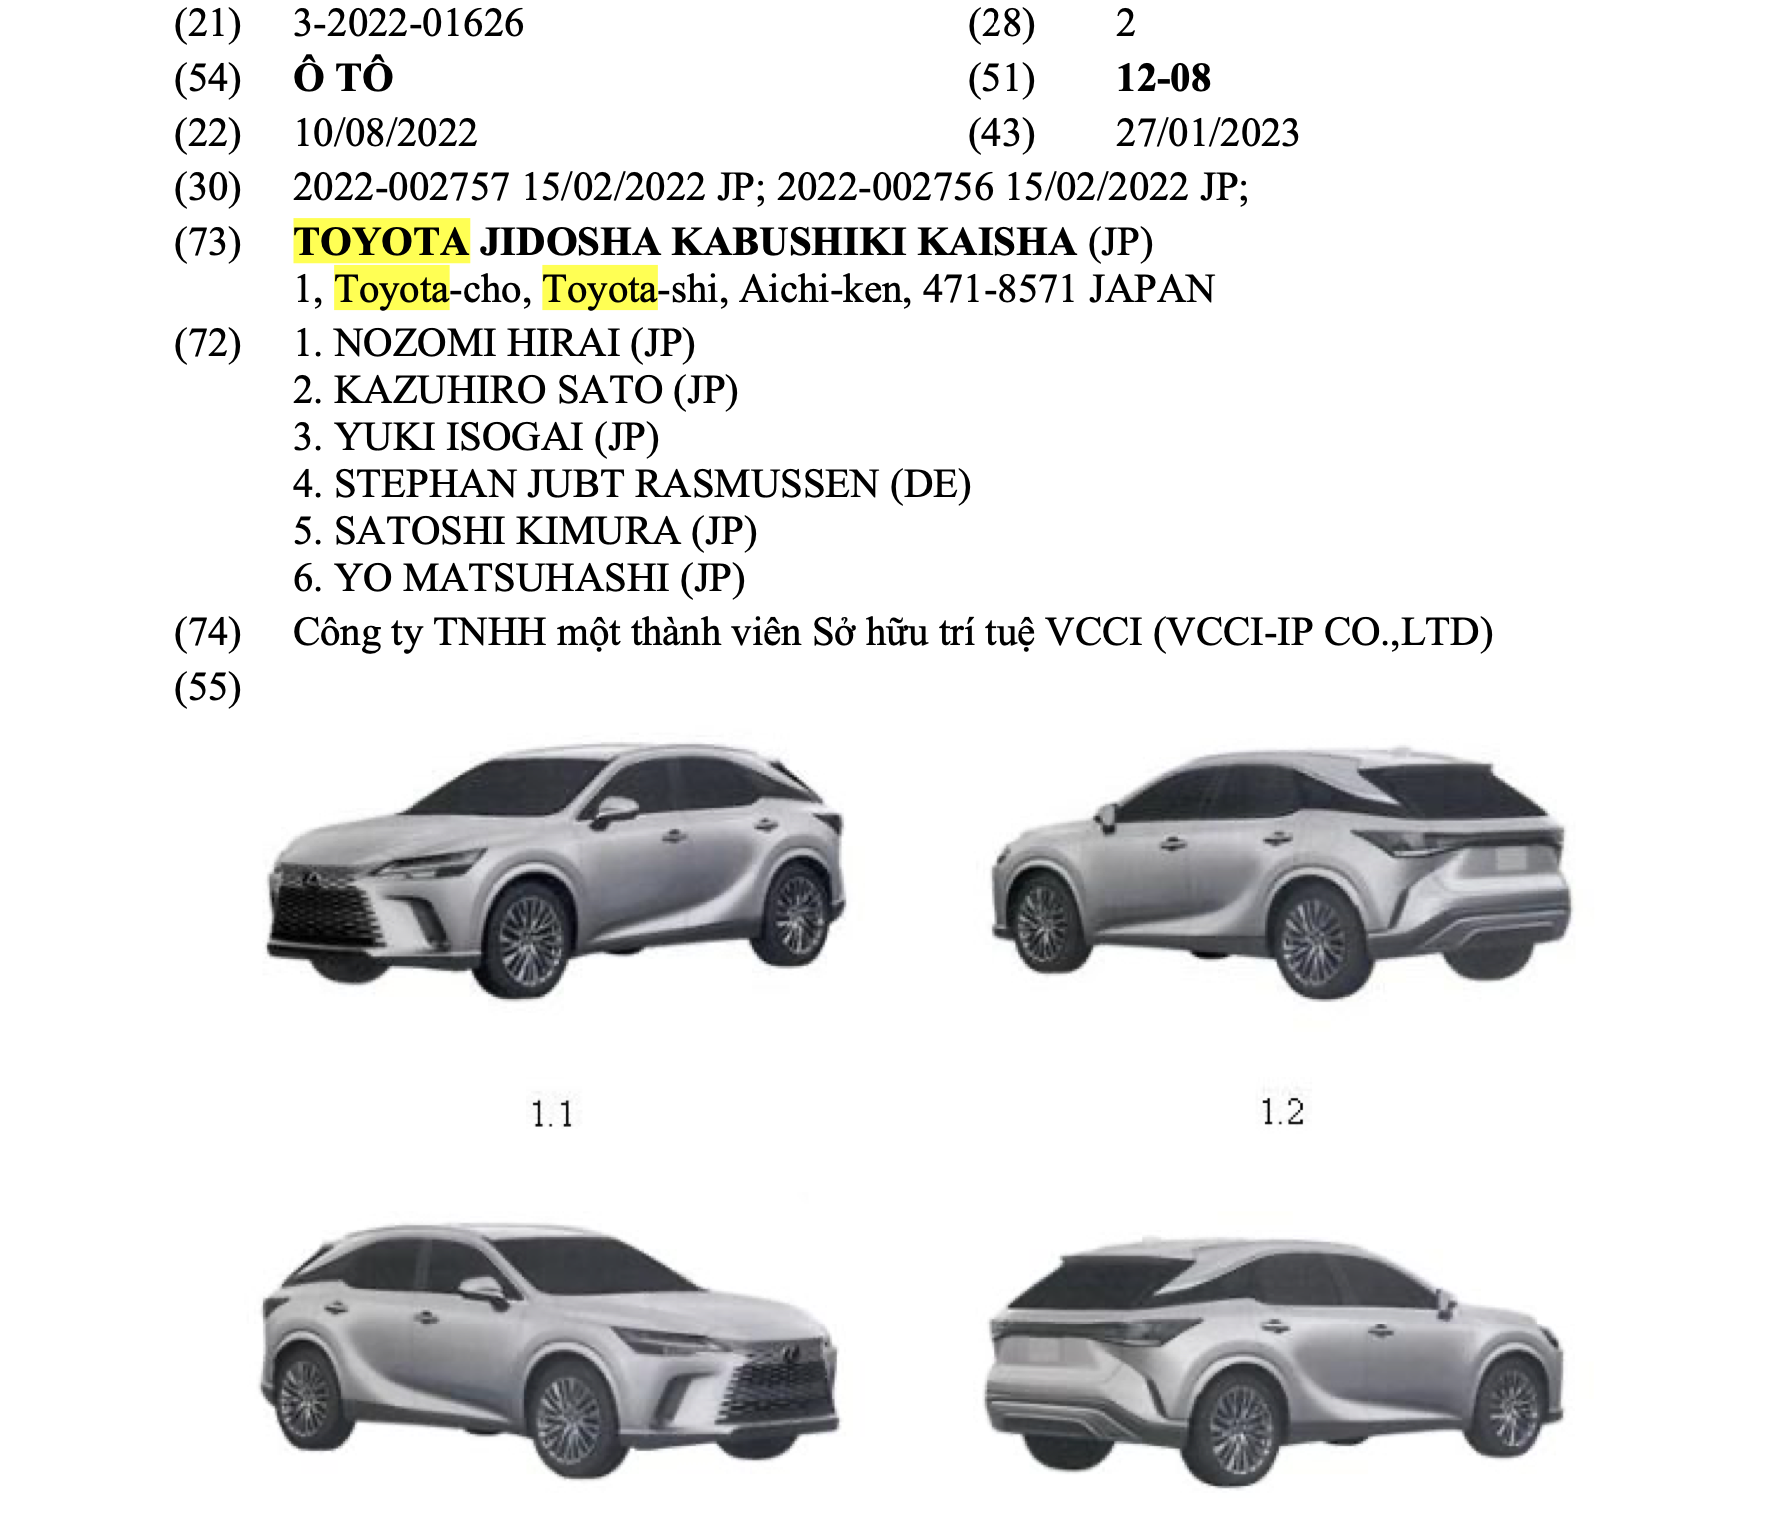 Lexus RX 2023 registered industrial design in Vietnam - Photo 1.